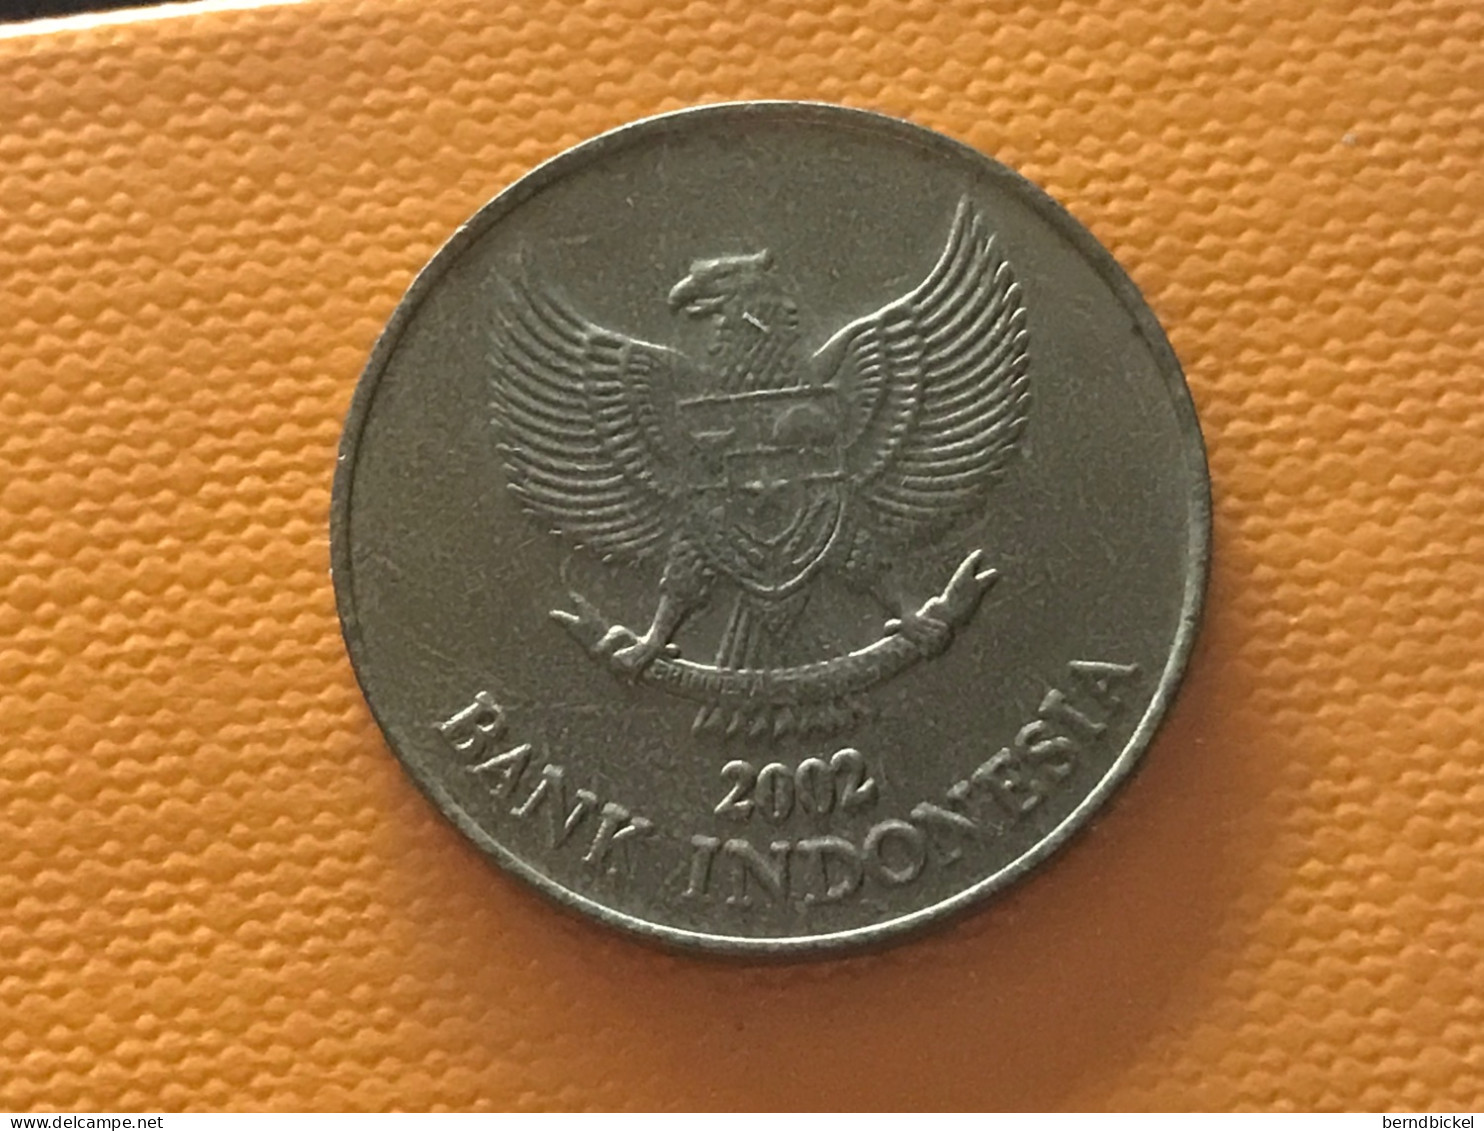 Münze Münzen Umlaufmünze Indonesien 500 Rupien 2002 - Indonesien